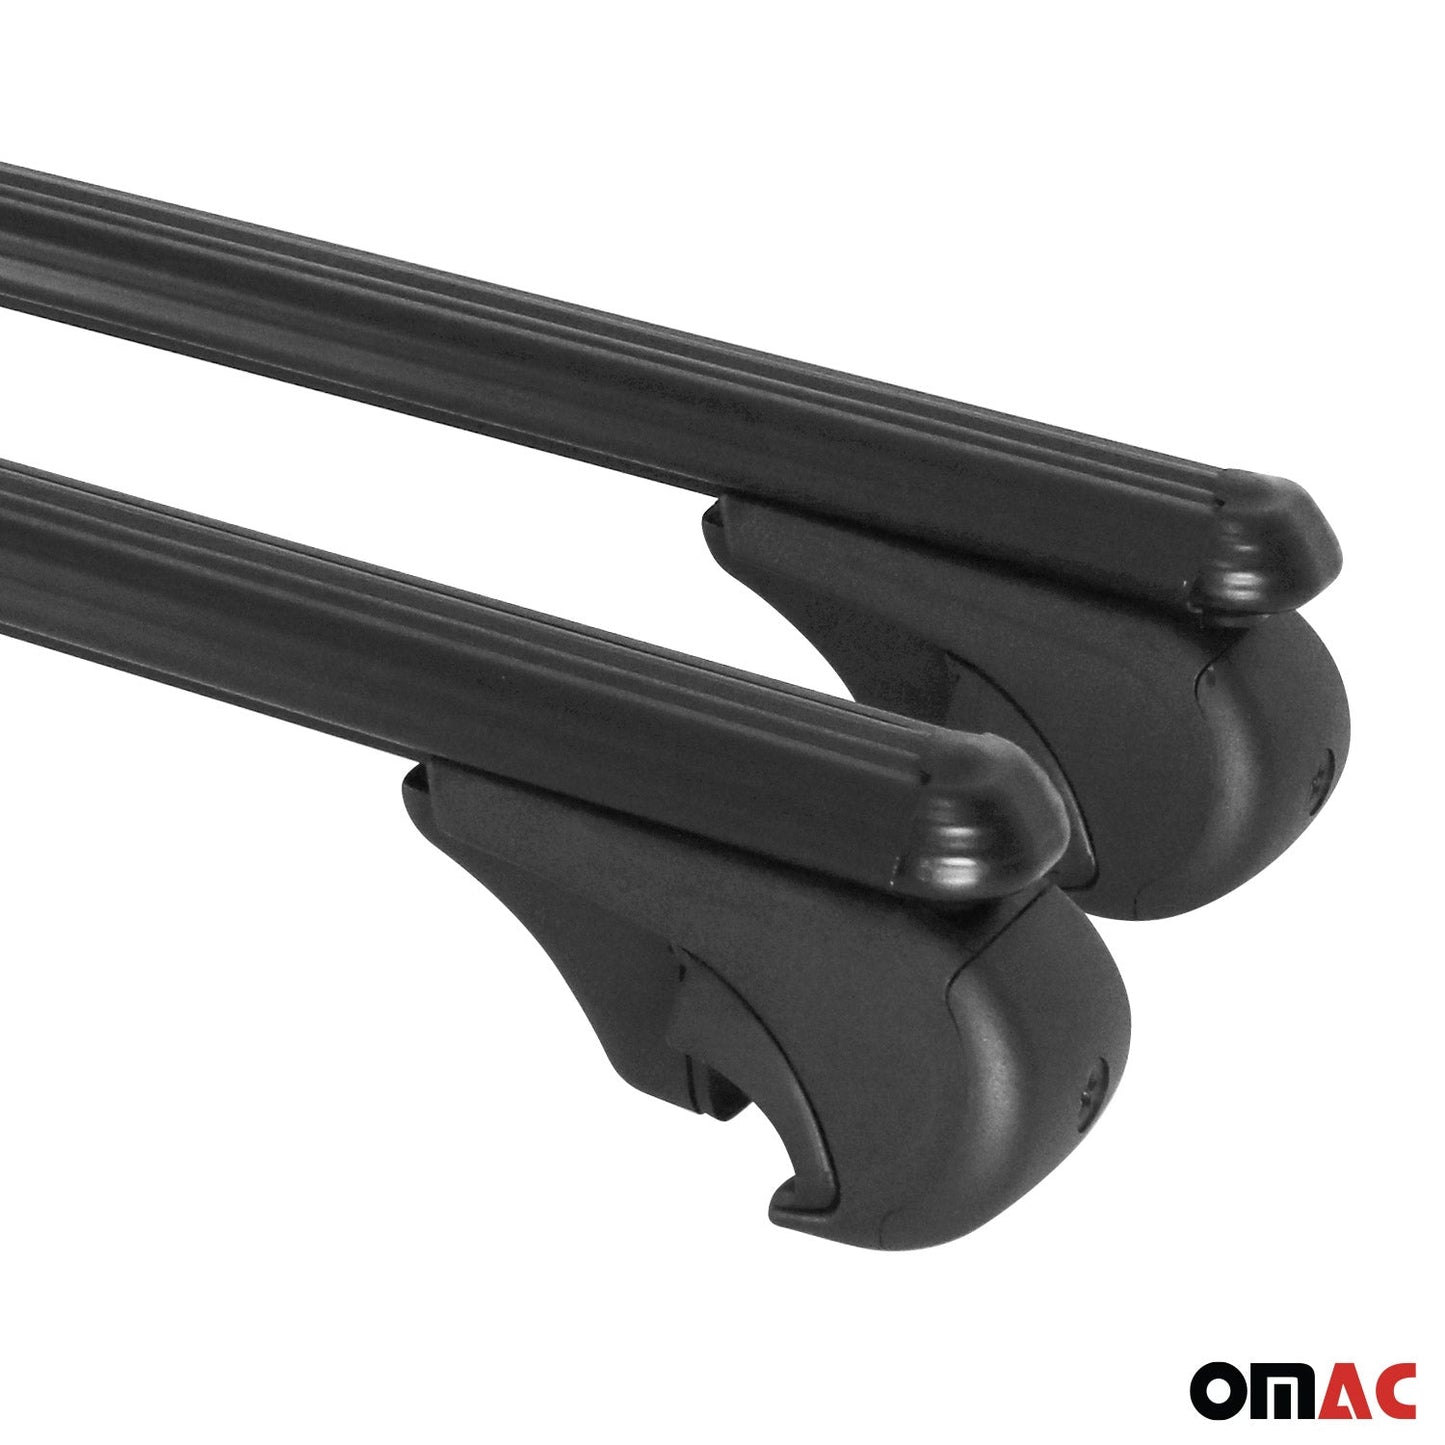 OMAC Lockable Roof Rack Cross Bars Carrier for Chrysler Town & Country 2001-07 Black 19069696929MB